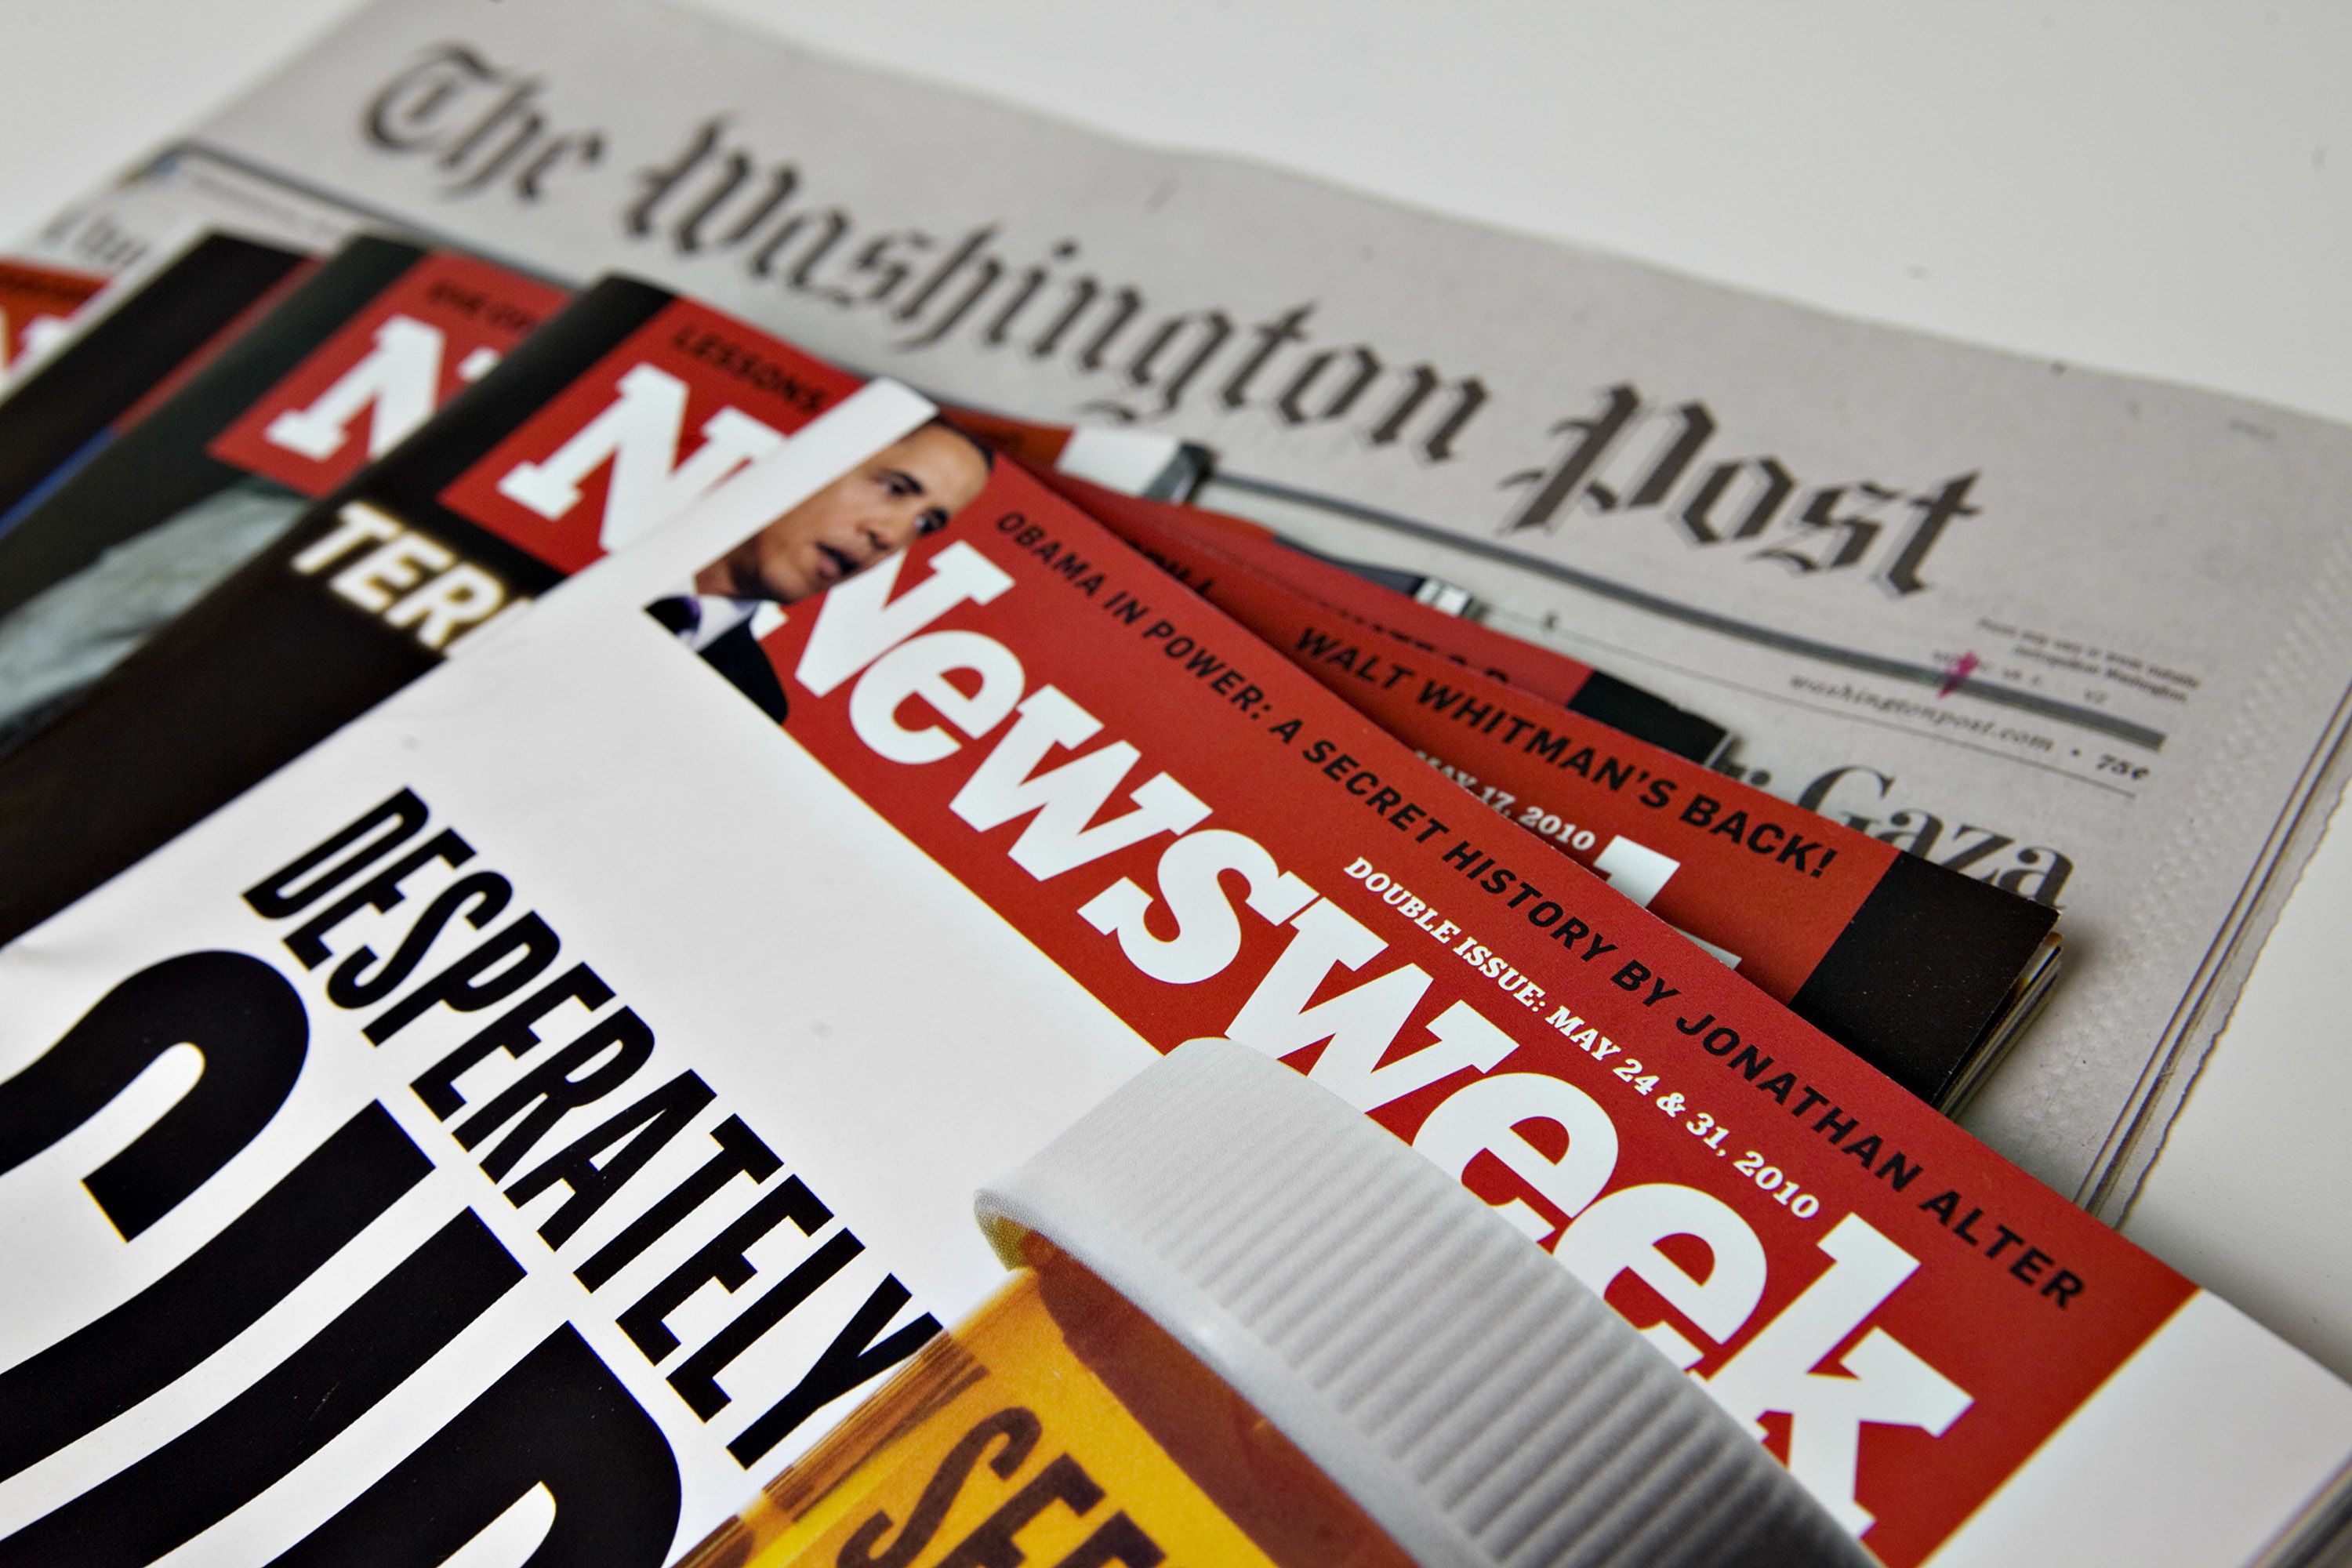 The Washington Post - Breaking news and latest headlines, U.S. news, world  news, and video - The Washington Post